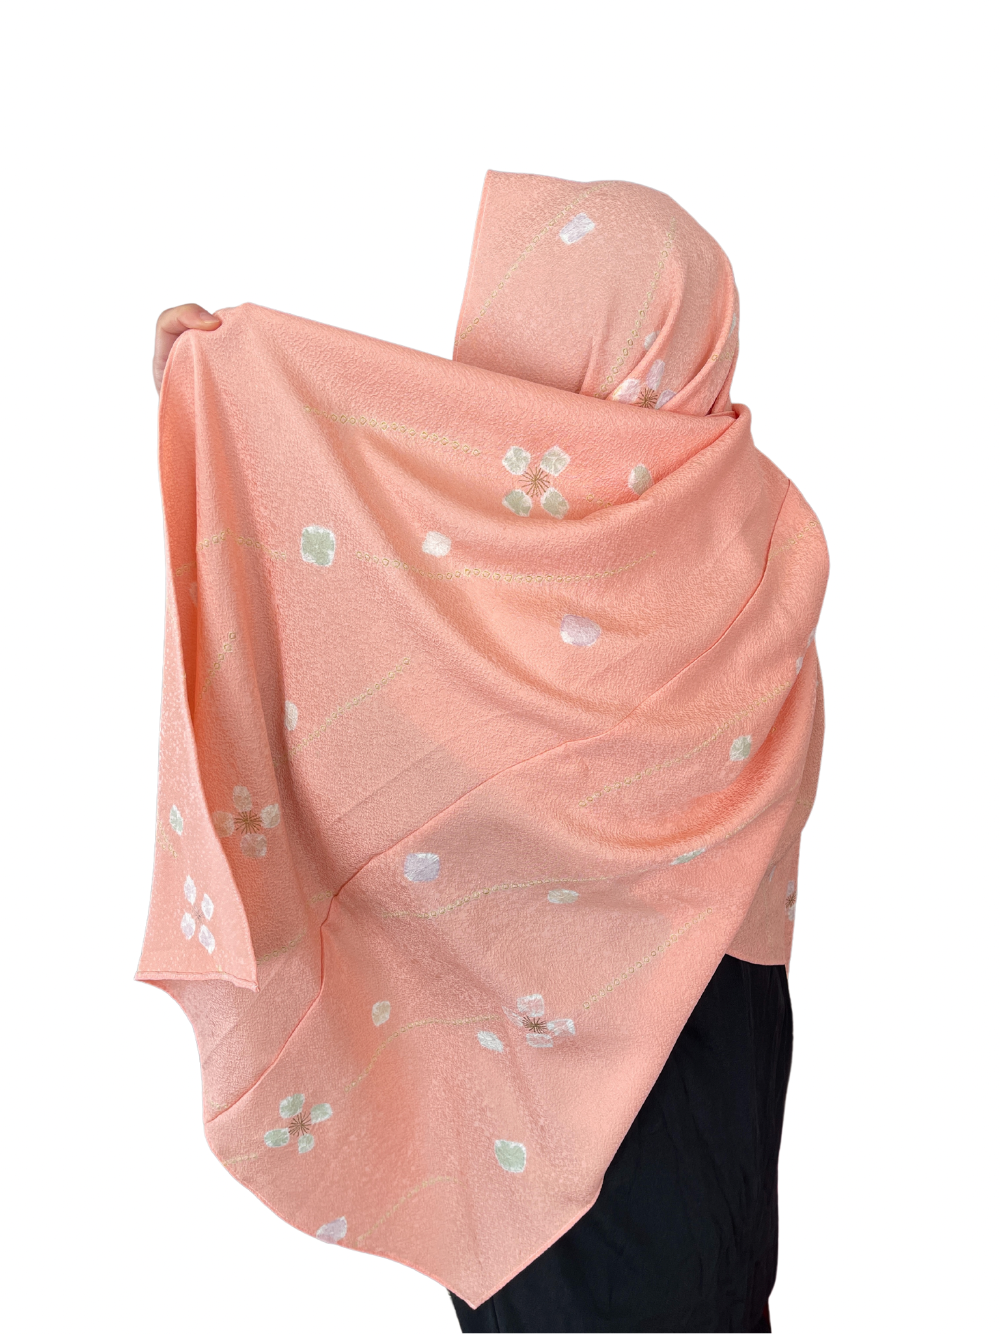 Jika Anda mencari suvenir di dunia Islam, bagaimana dengan jilbab kimono yang senang dengan Muslim Asia Tenggara? salinan dari